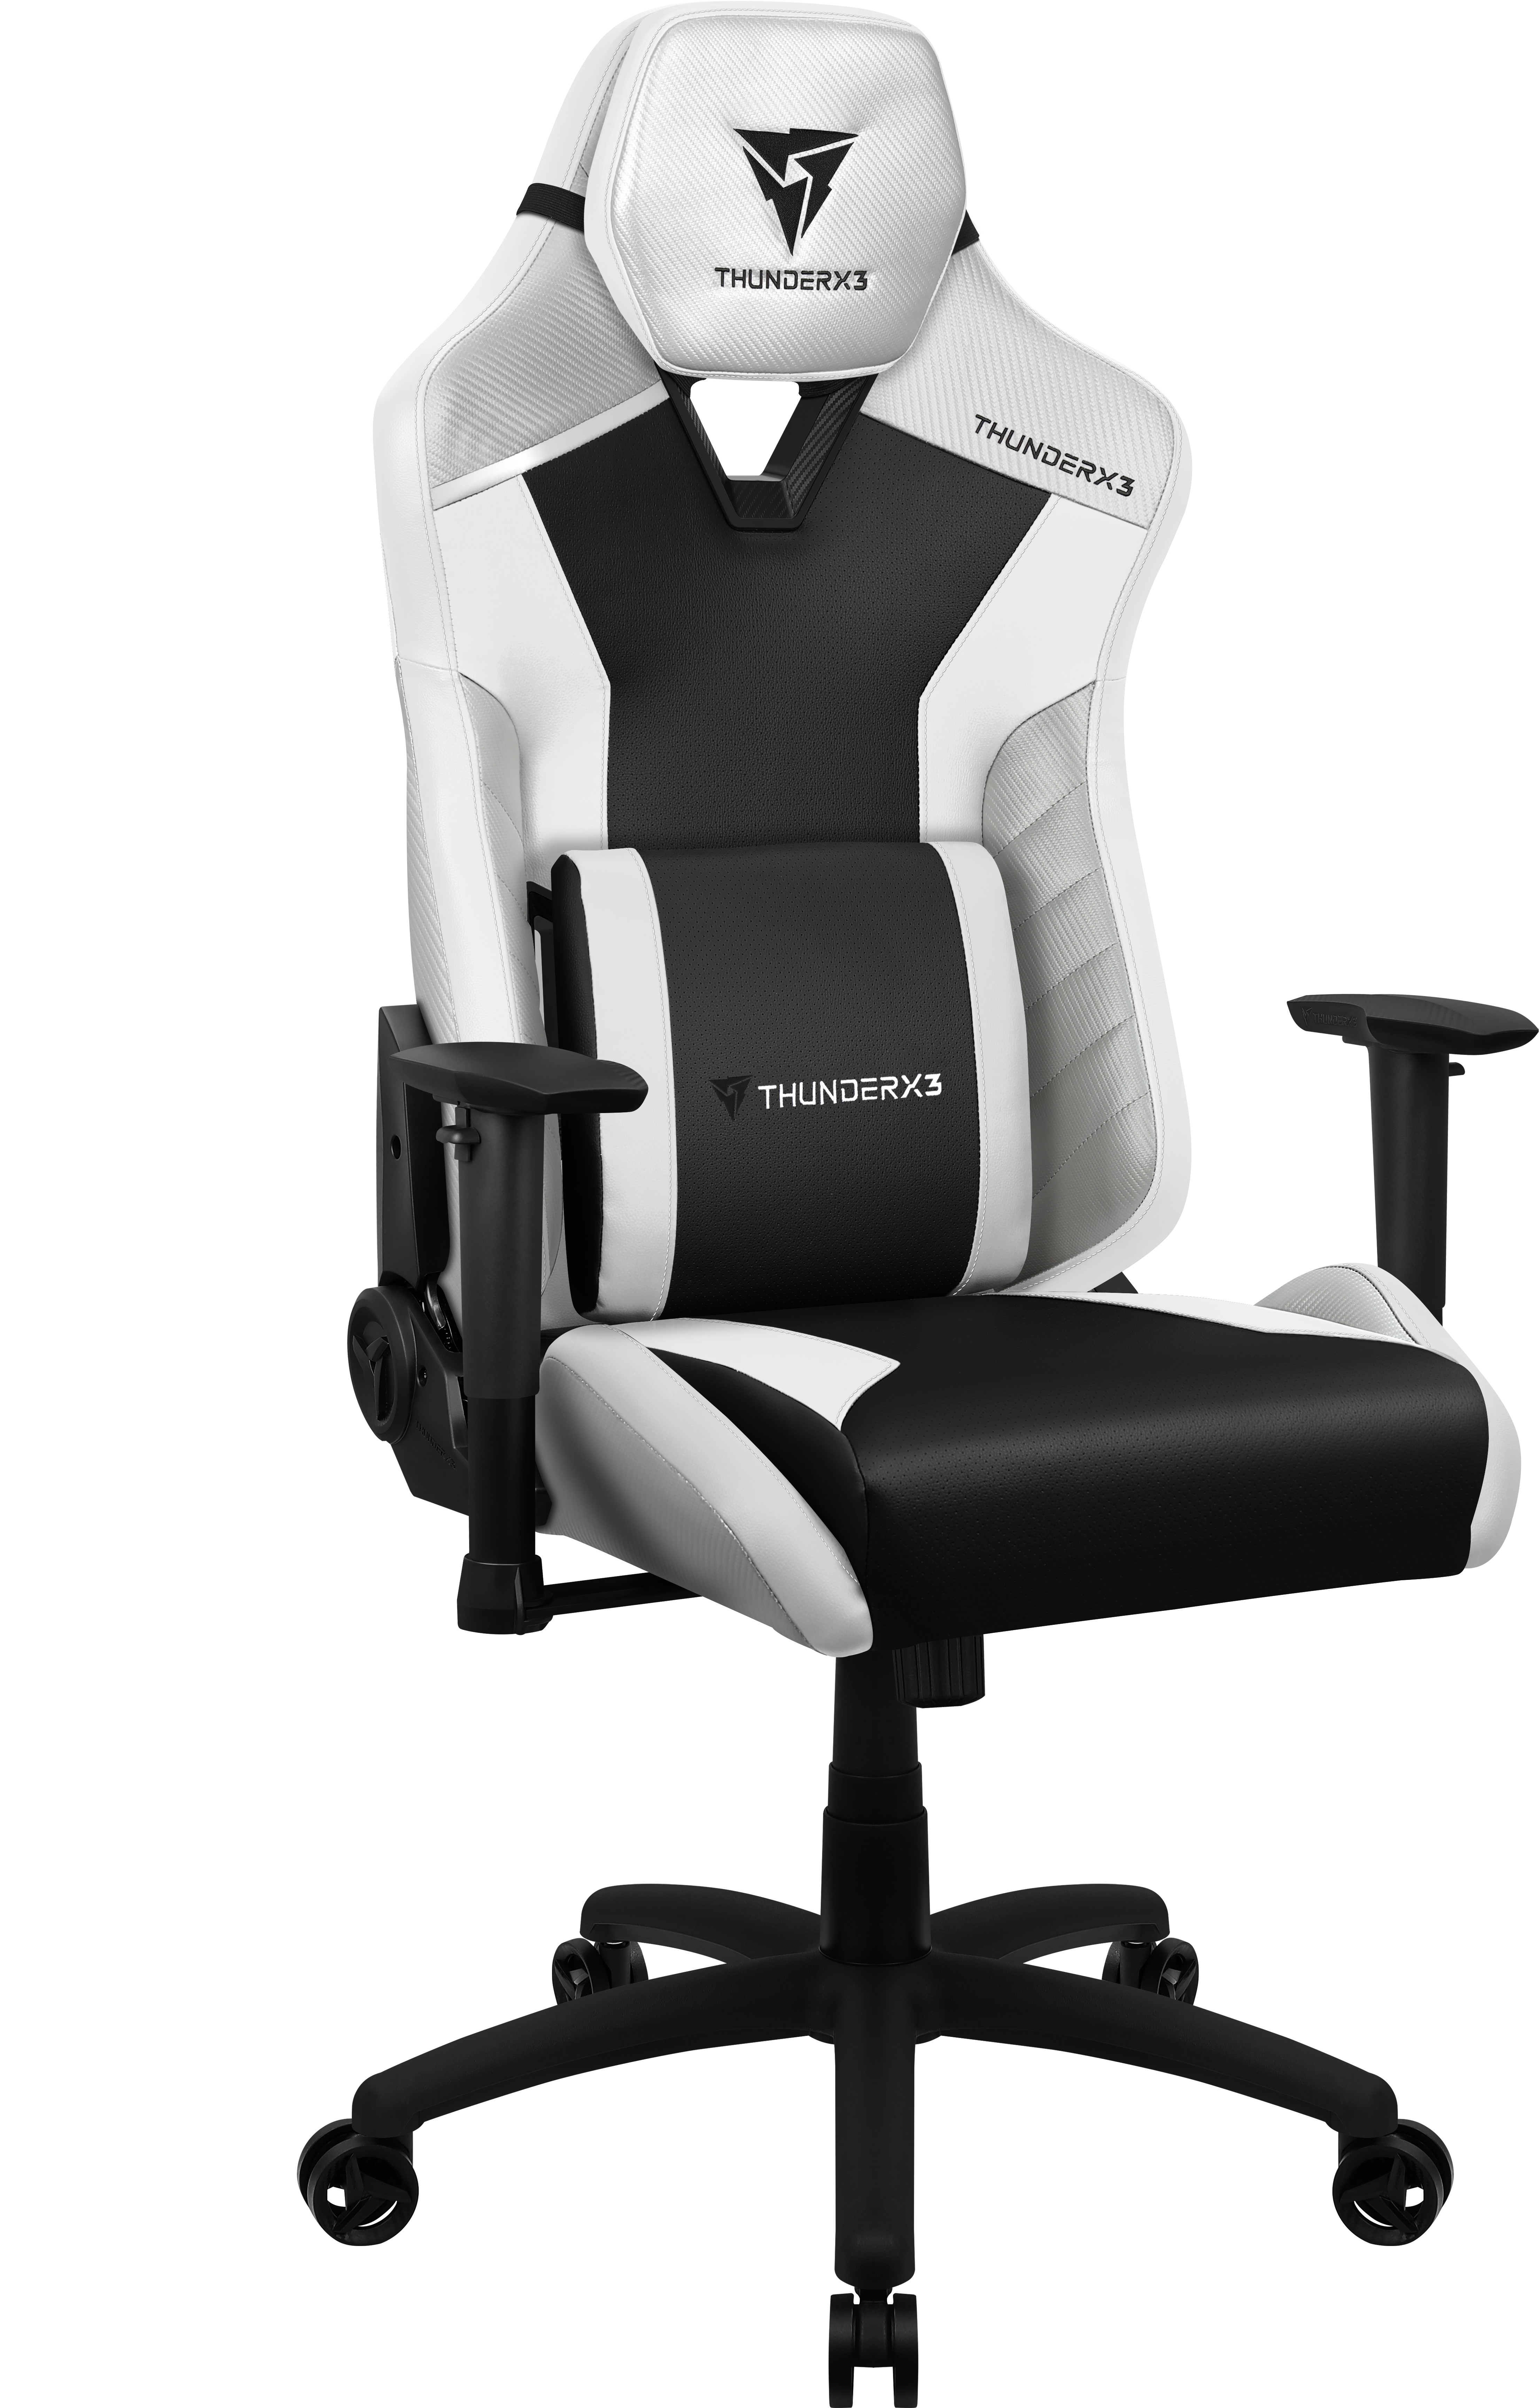 ThunderX3 - ThunderX3 TC3 MAX Gaming Chair - All White